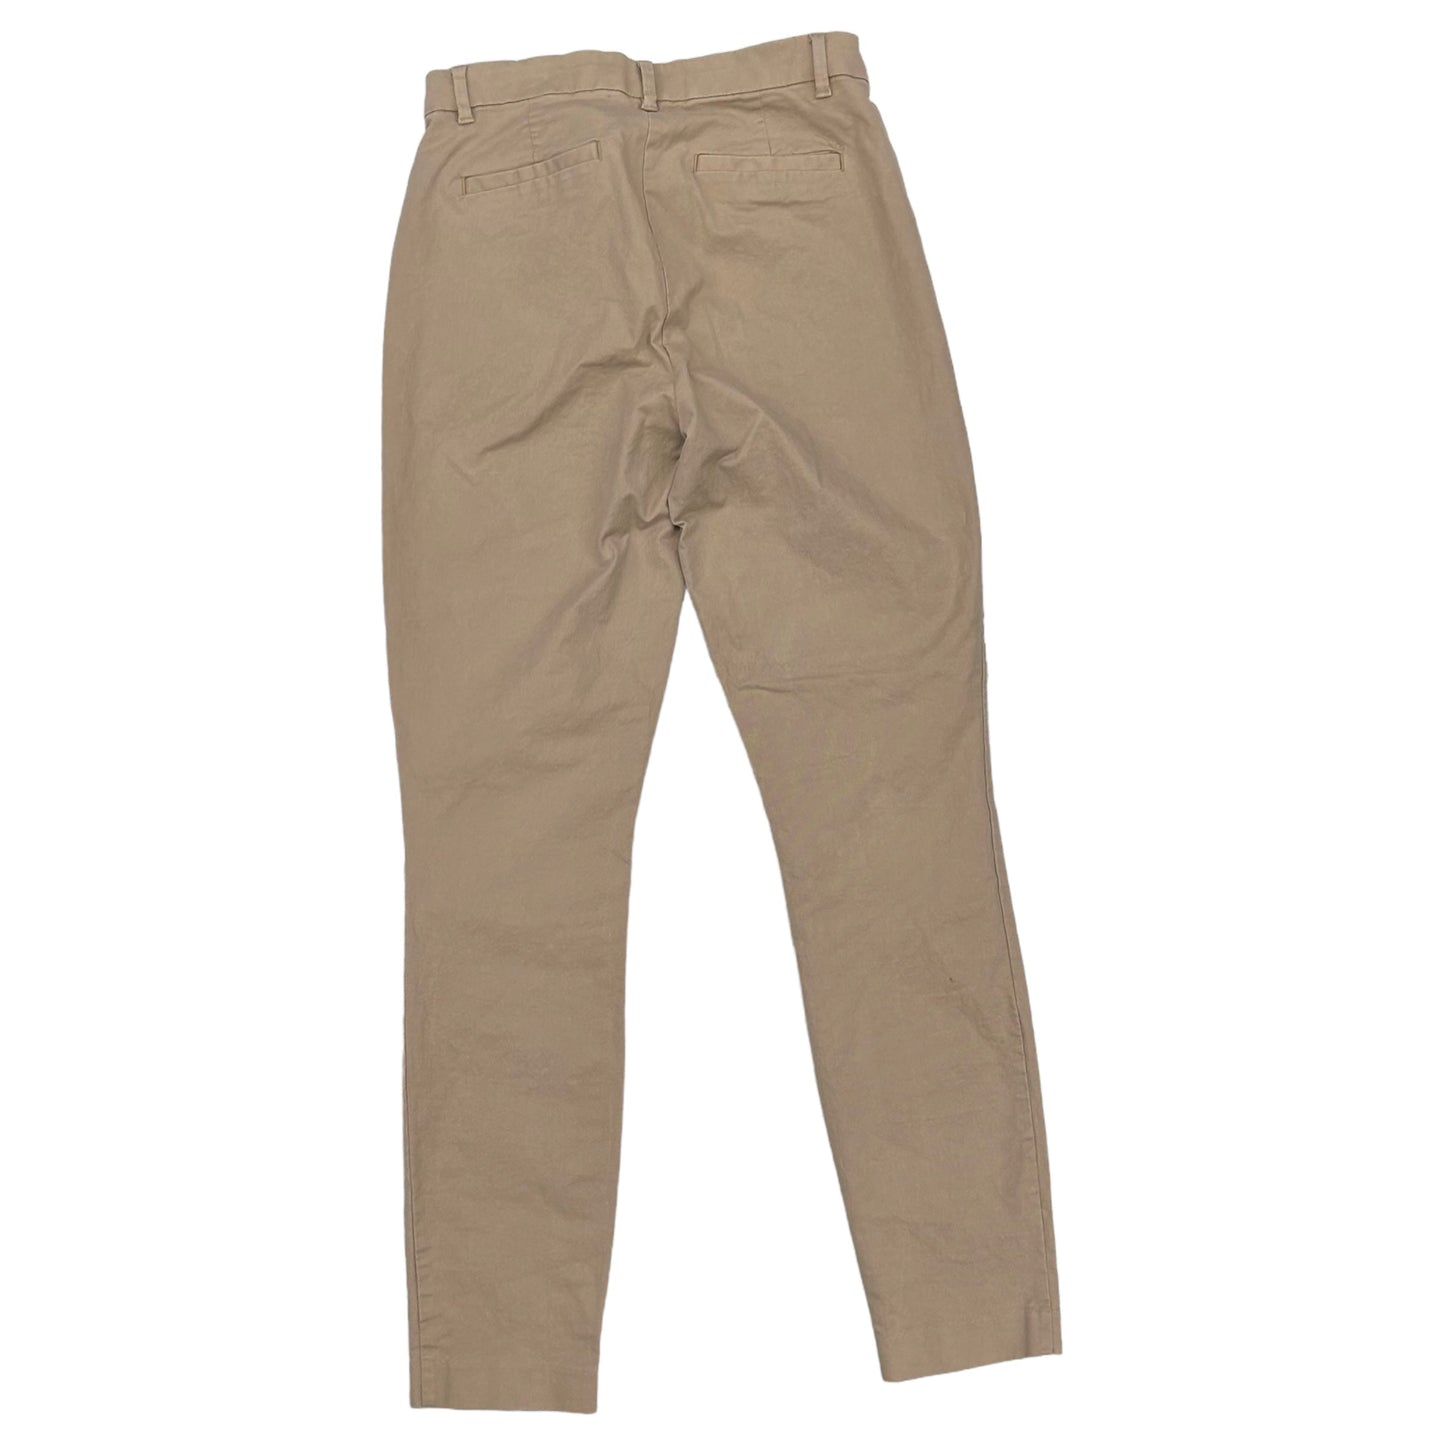 Pants Chinos & Khakis By Gap  Size: 10tall